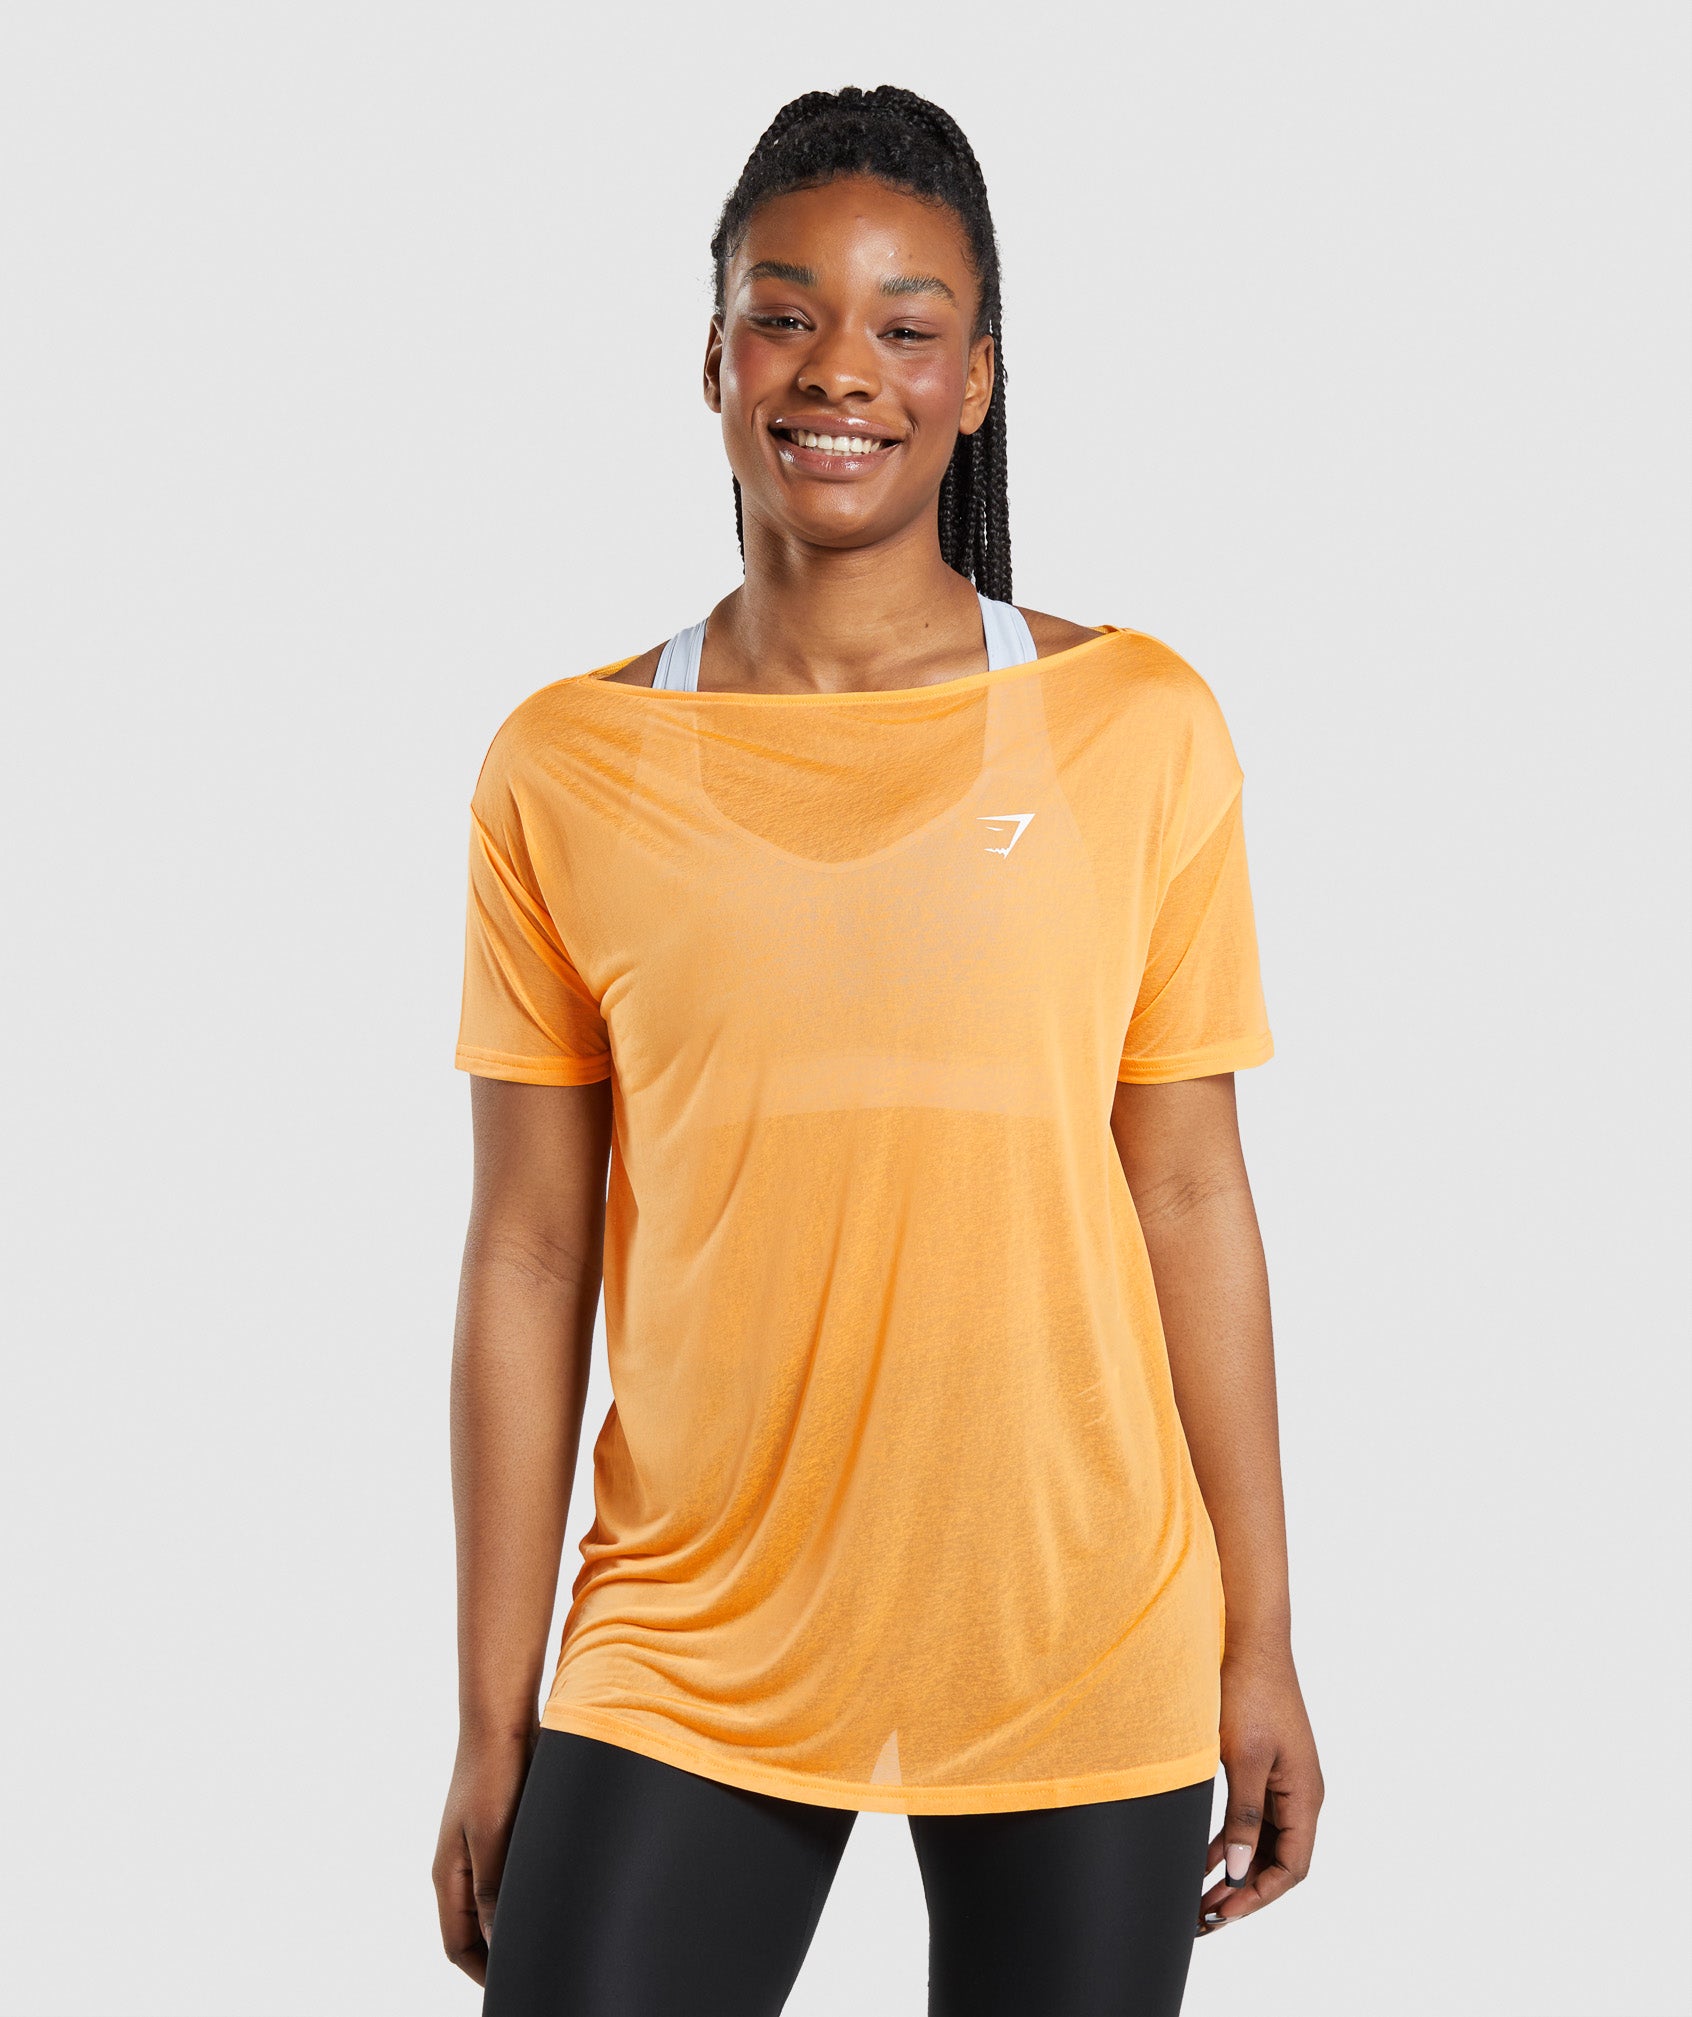 Gymshark Orange T-shirts for Women